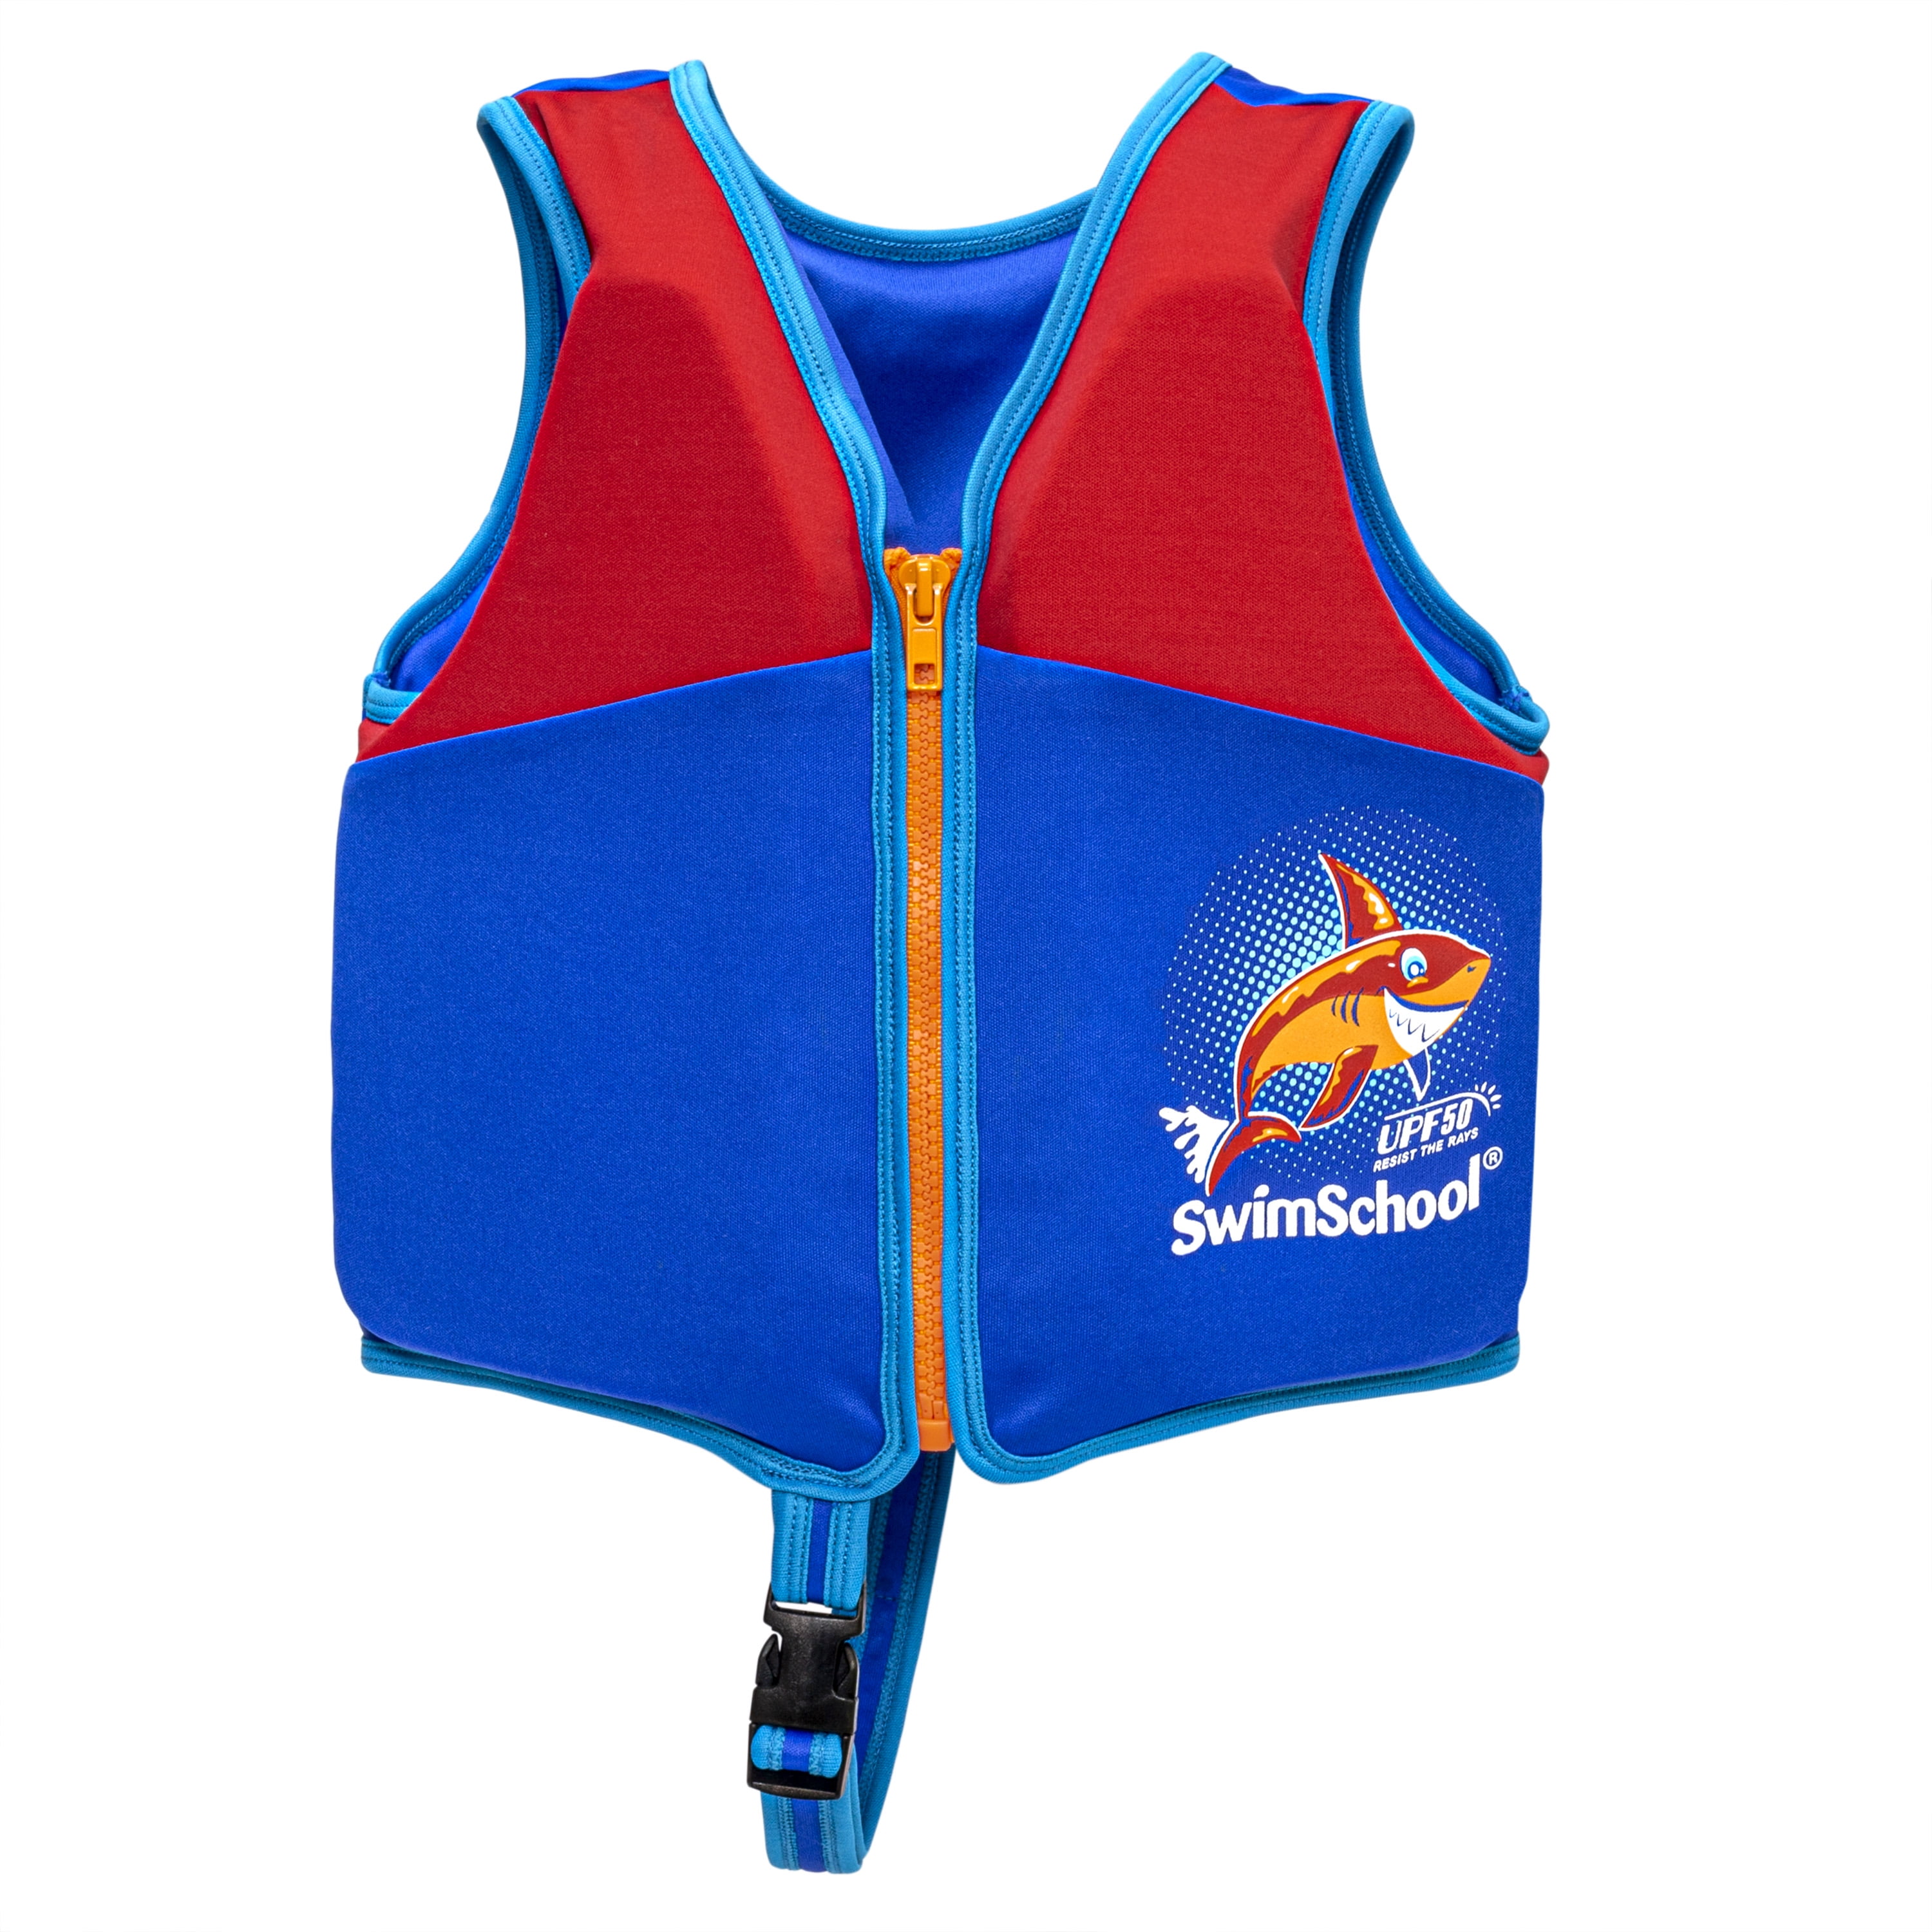 SwimSchool Swim Trainer Vest Adj Safety Level 2 Upf50 Blue & Aqua for Ages 4-6 for sale online 